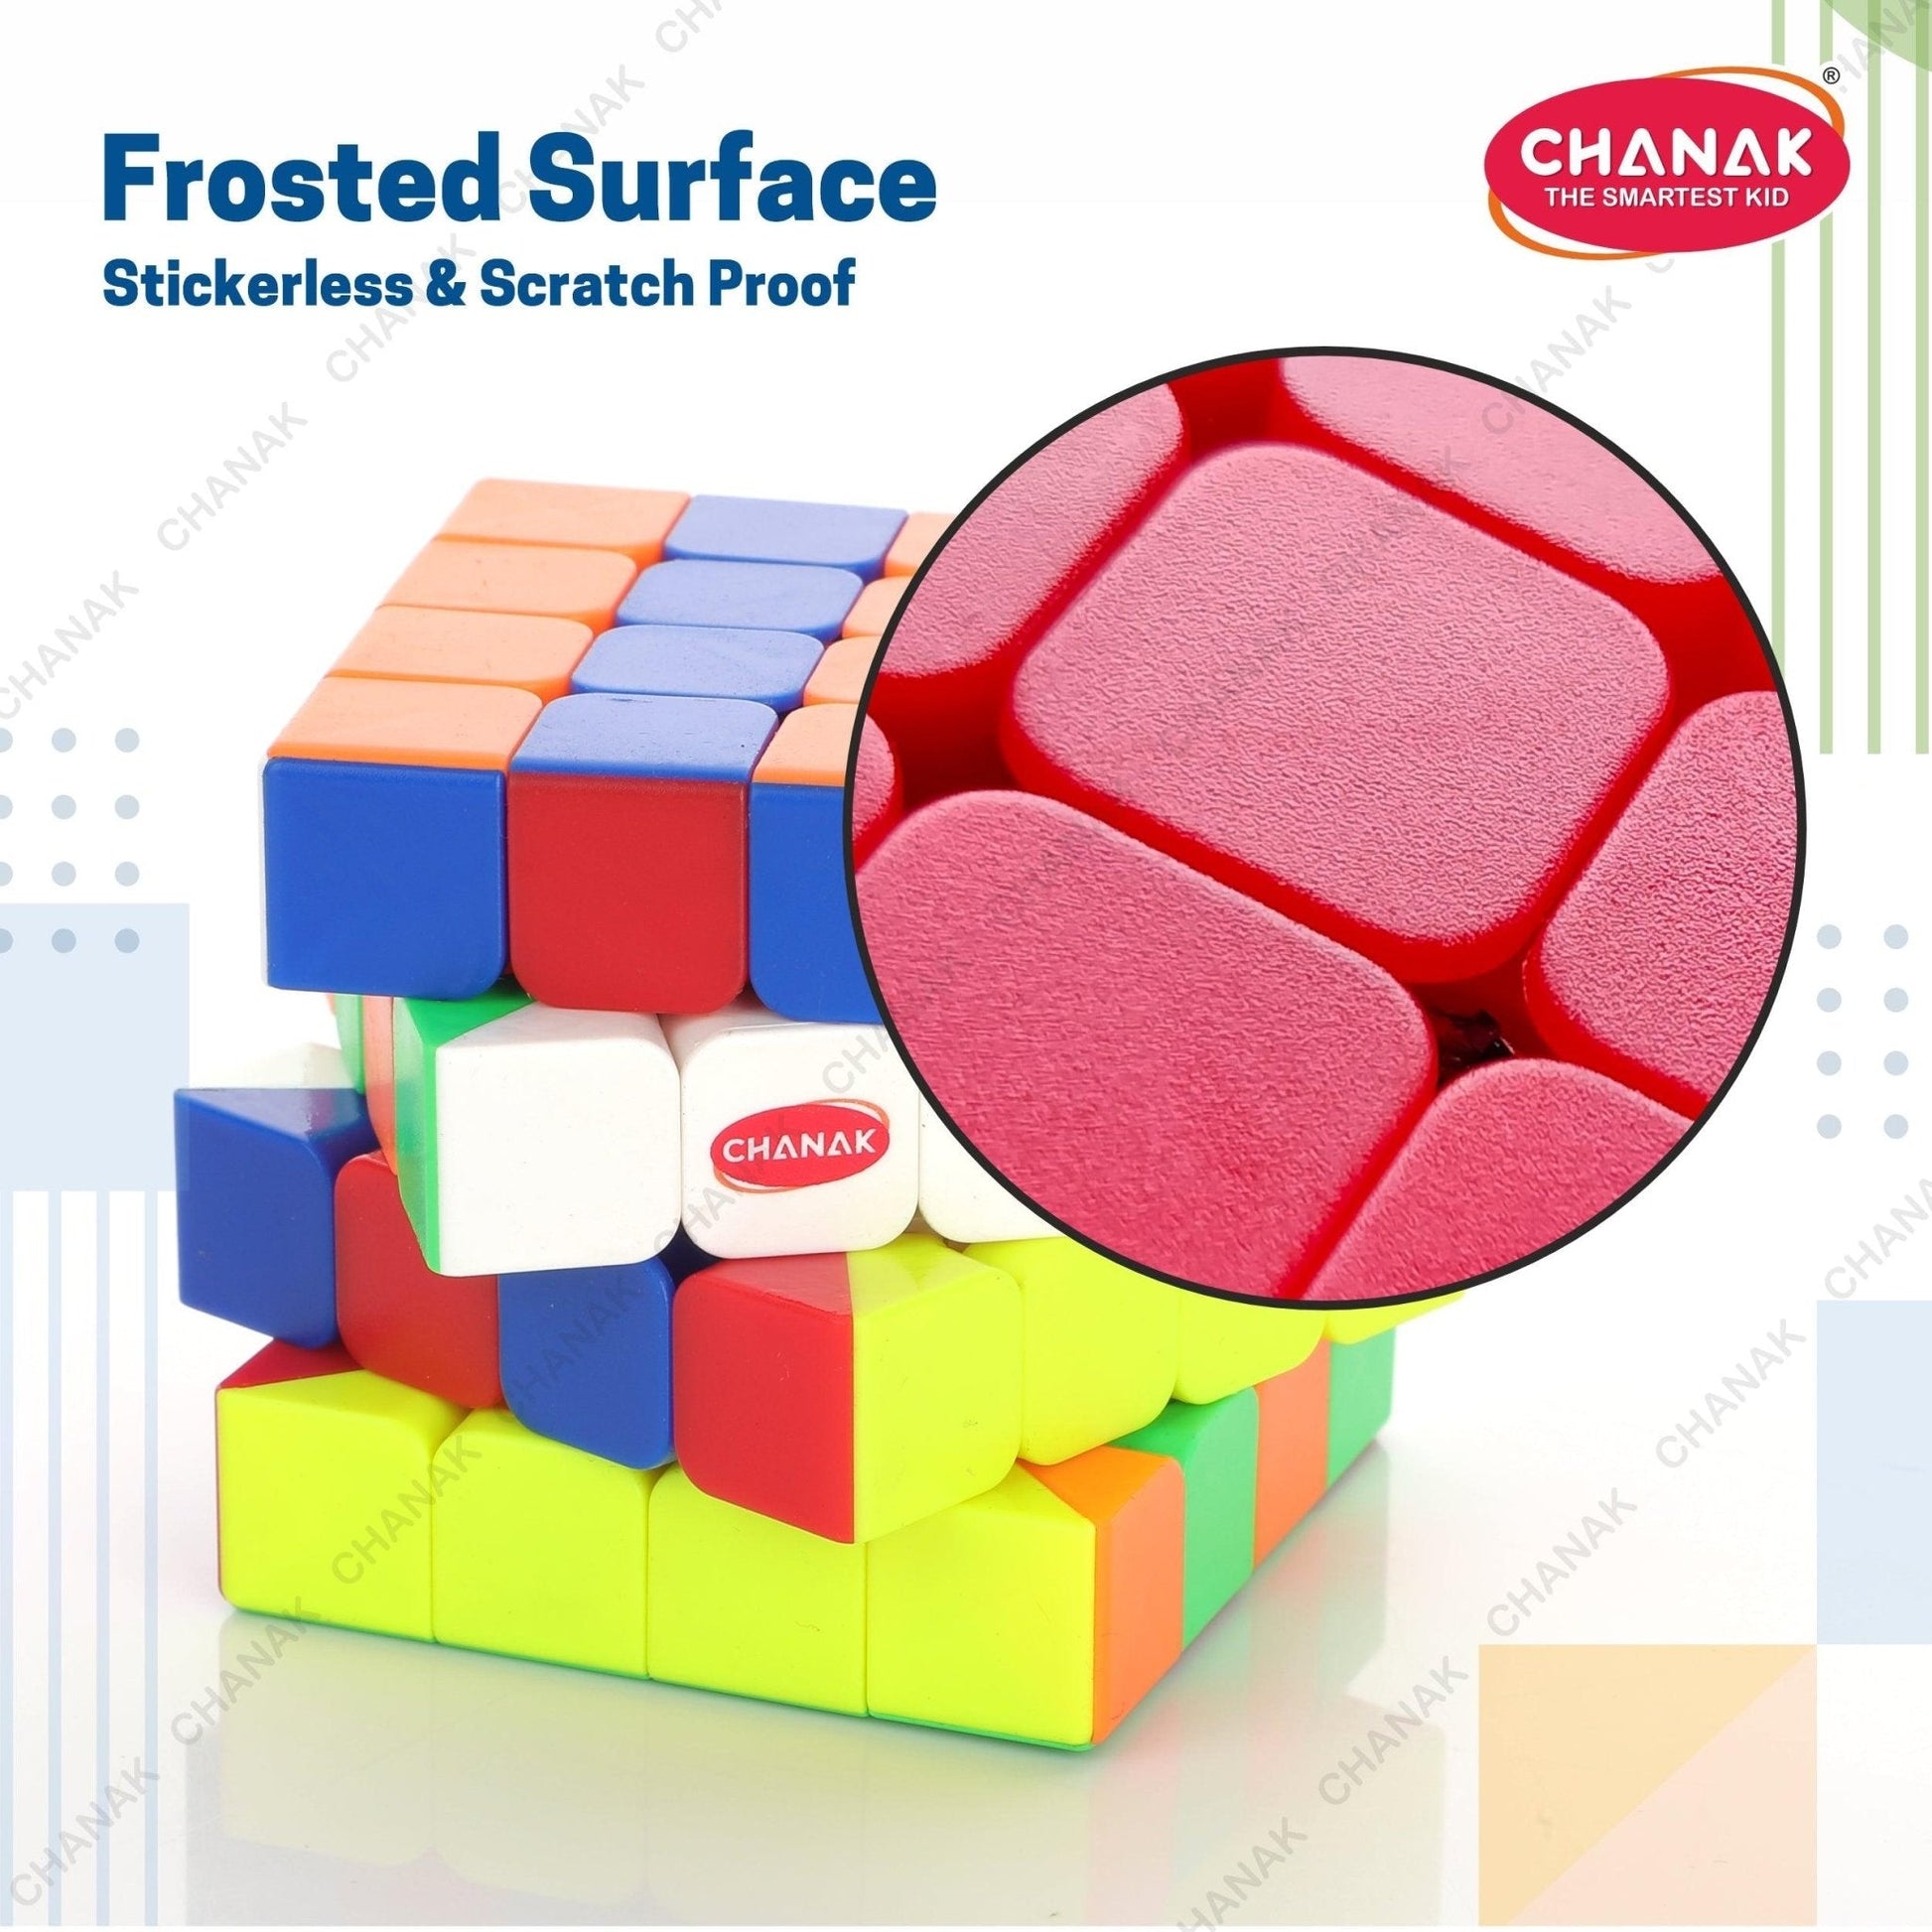 Chanak 4x4 Cube - Rubic Puzzle for Kids - chanak